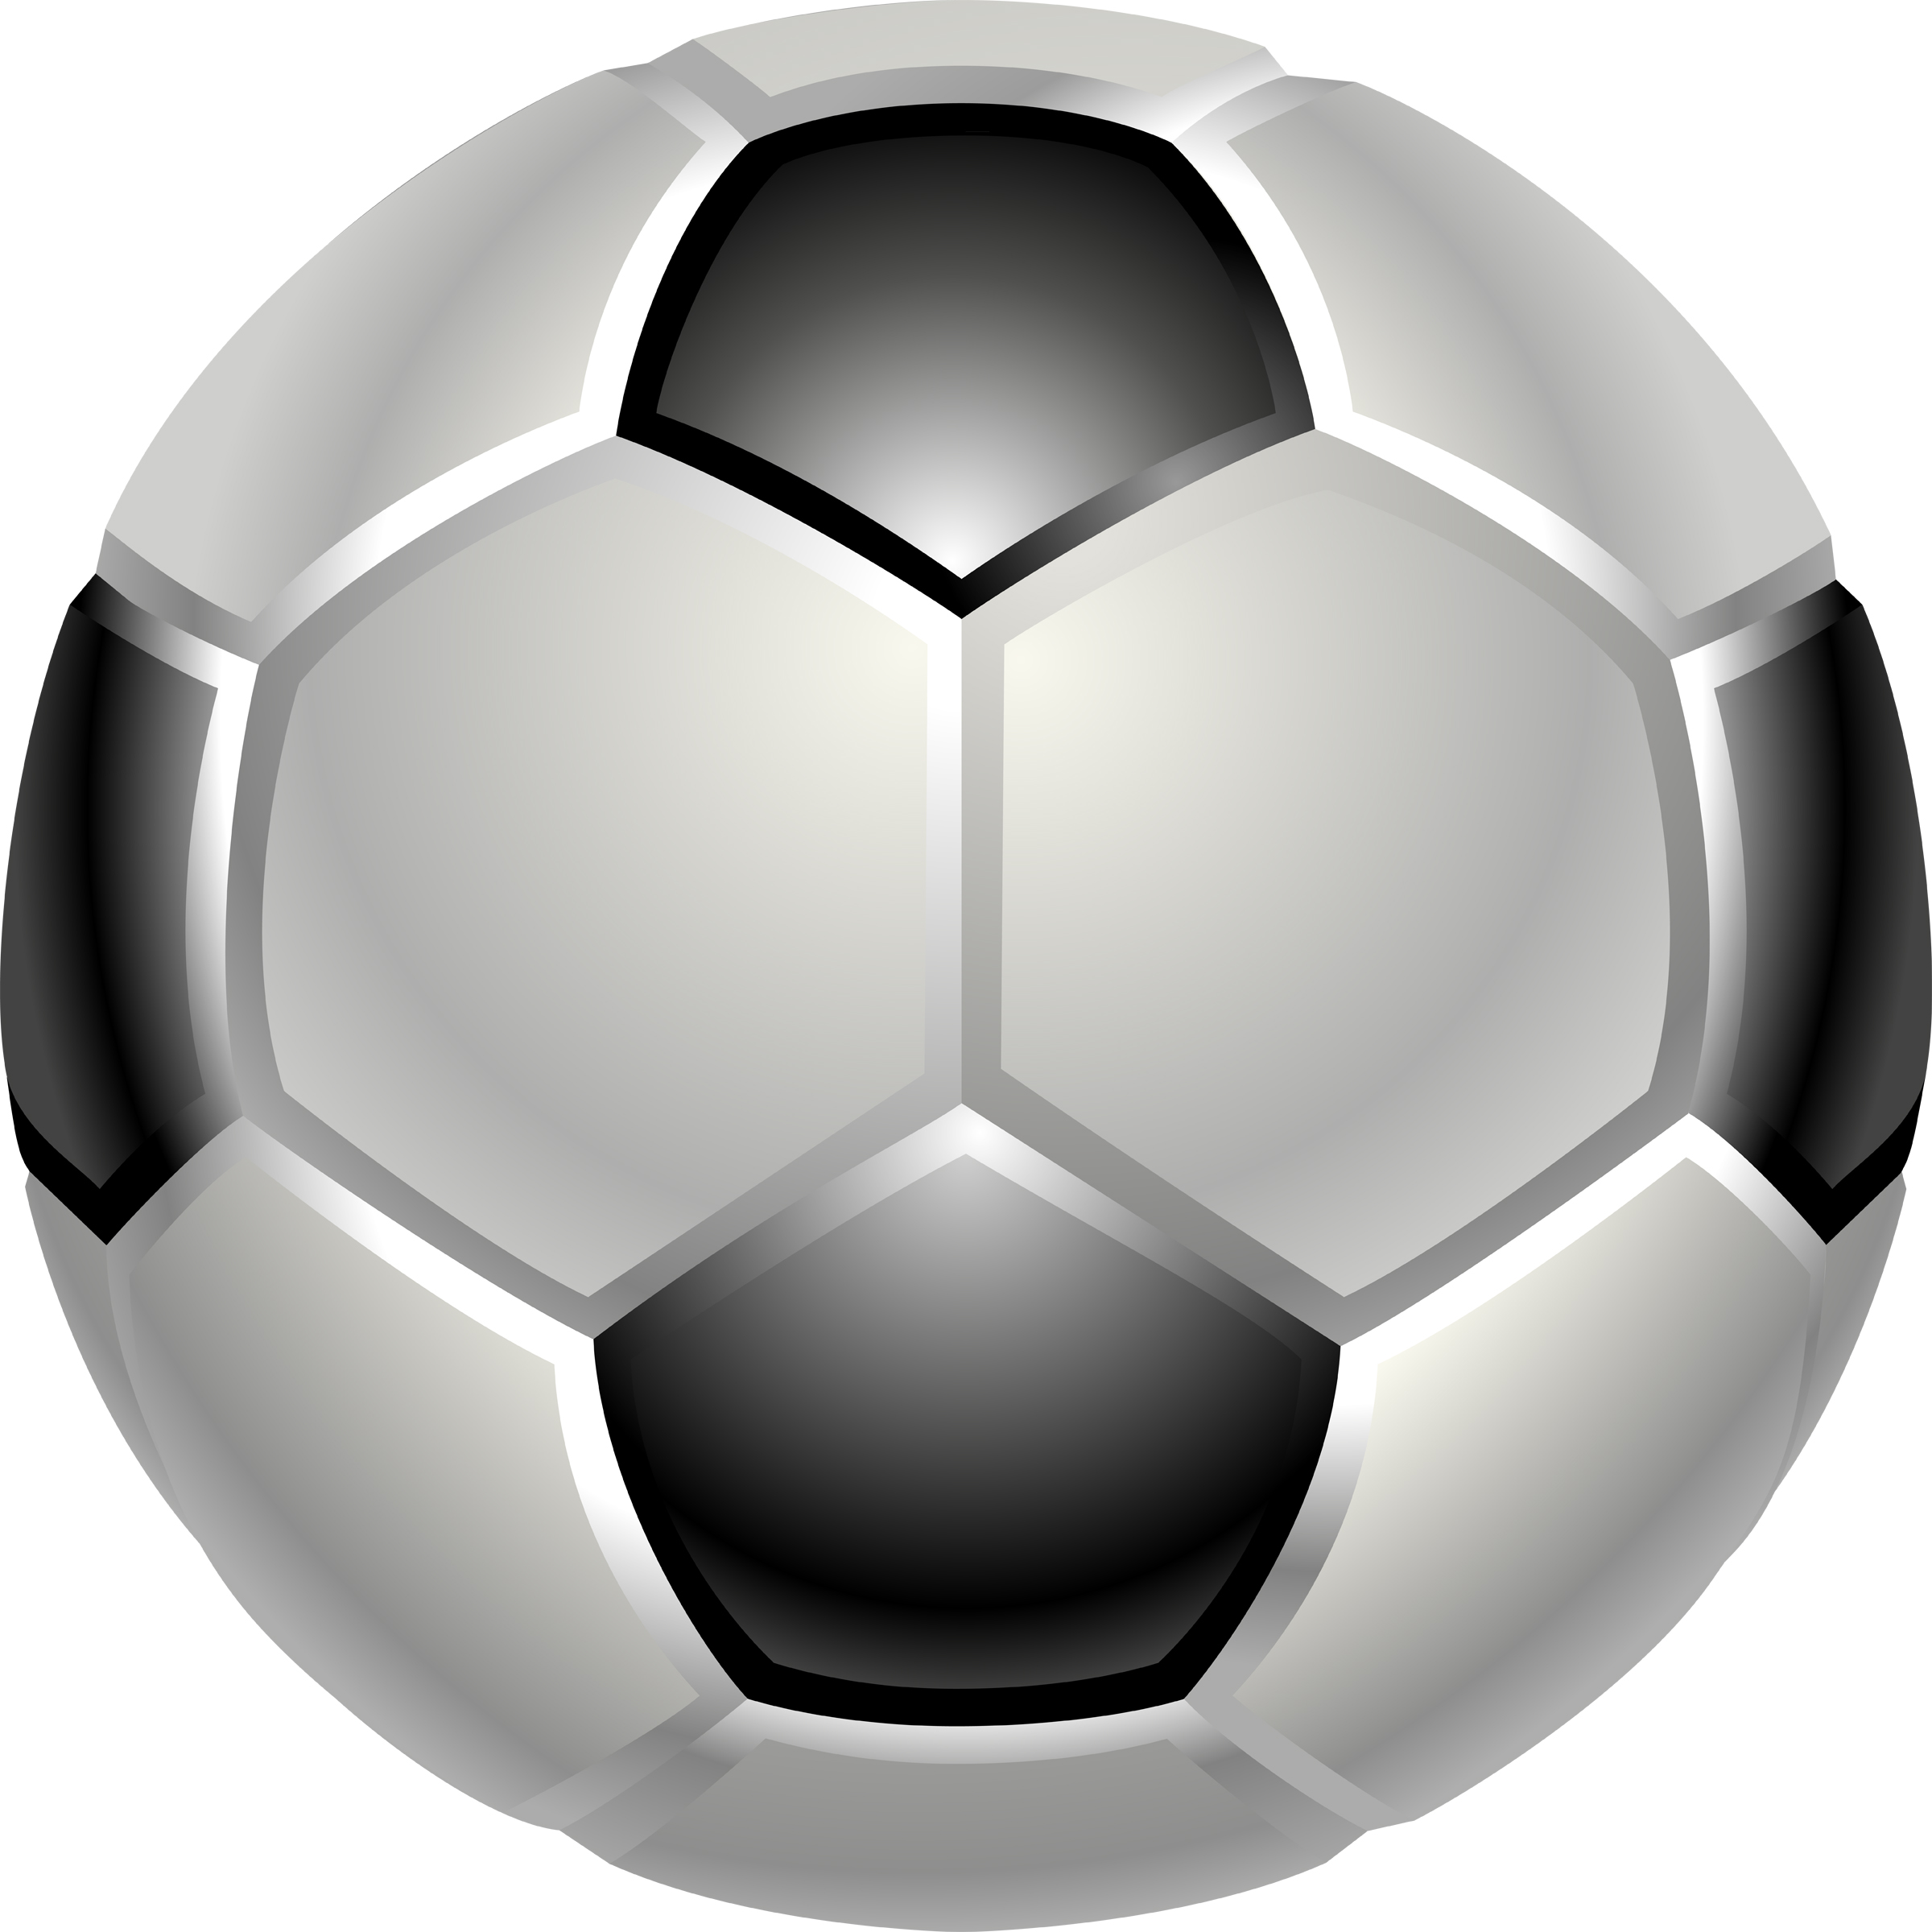 clipart soccer ball